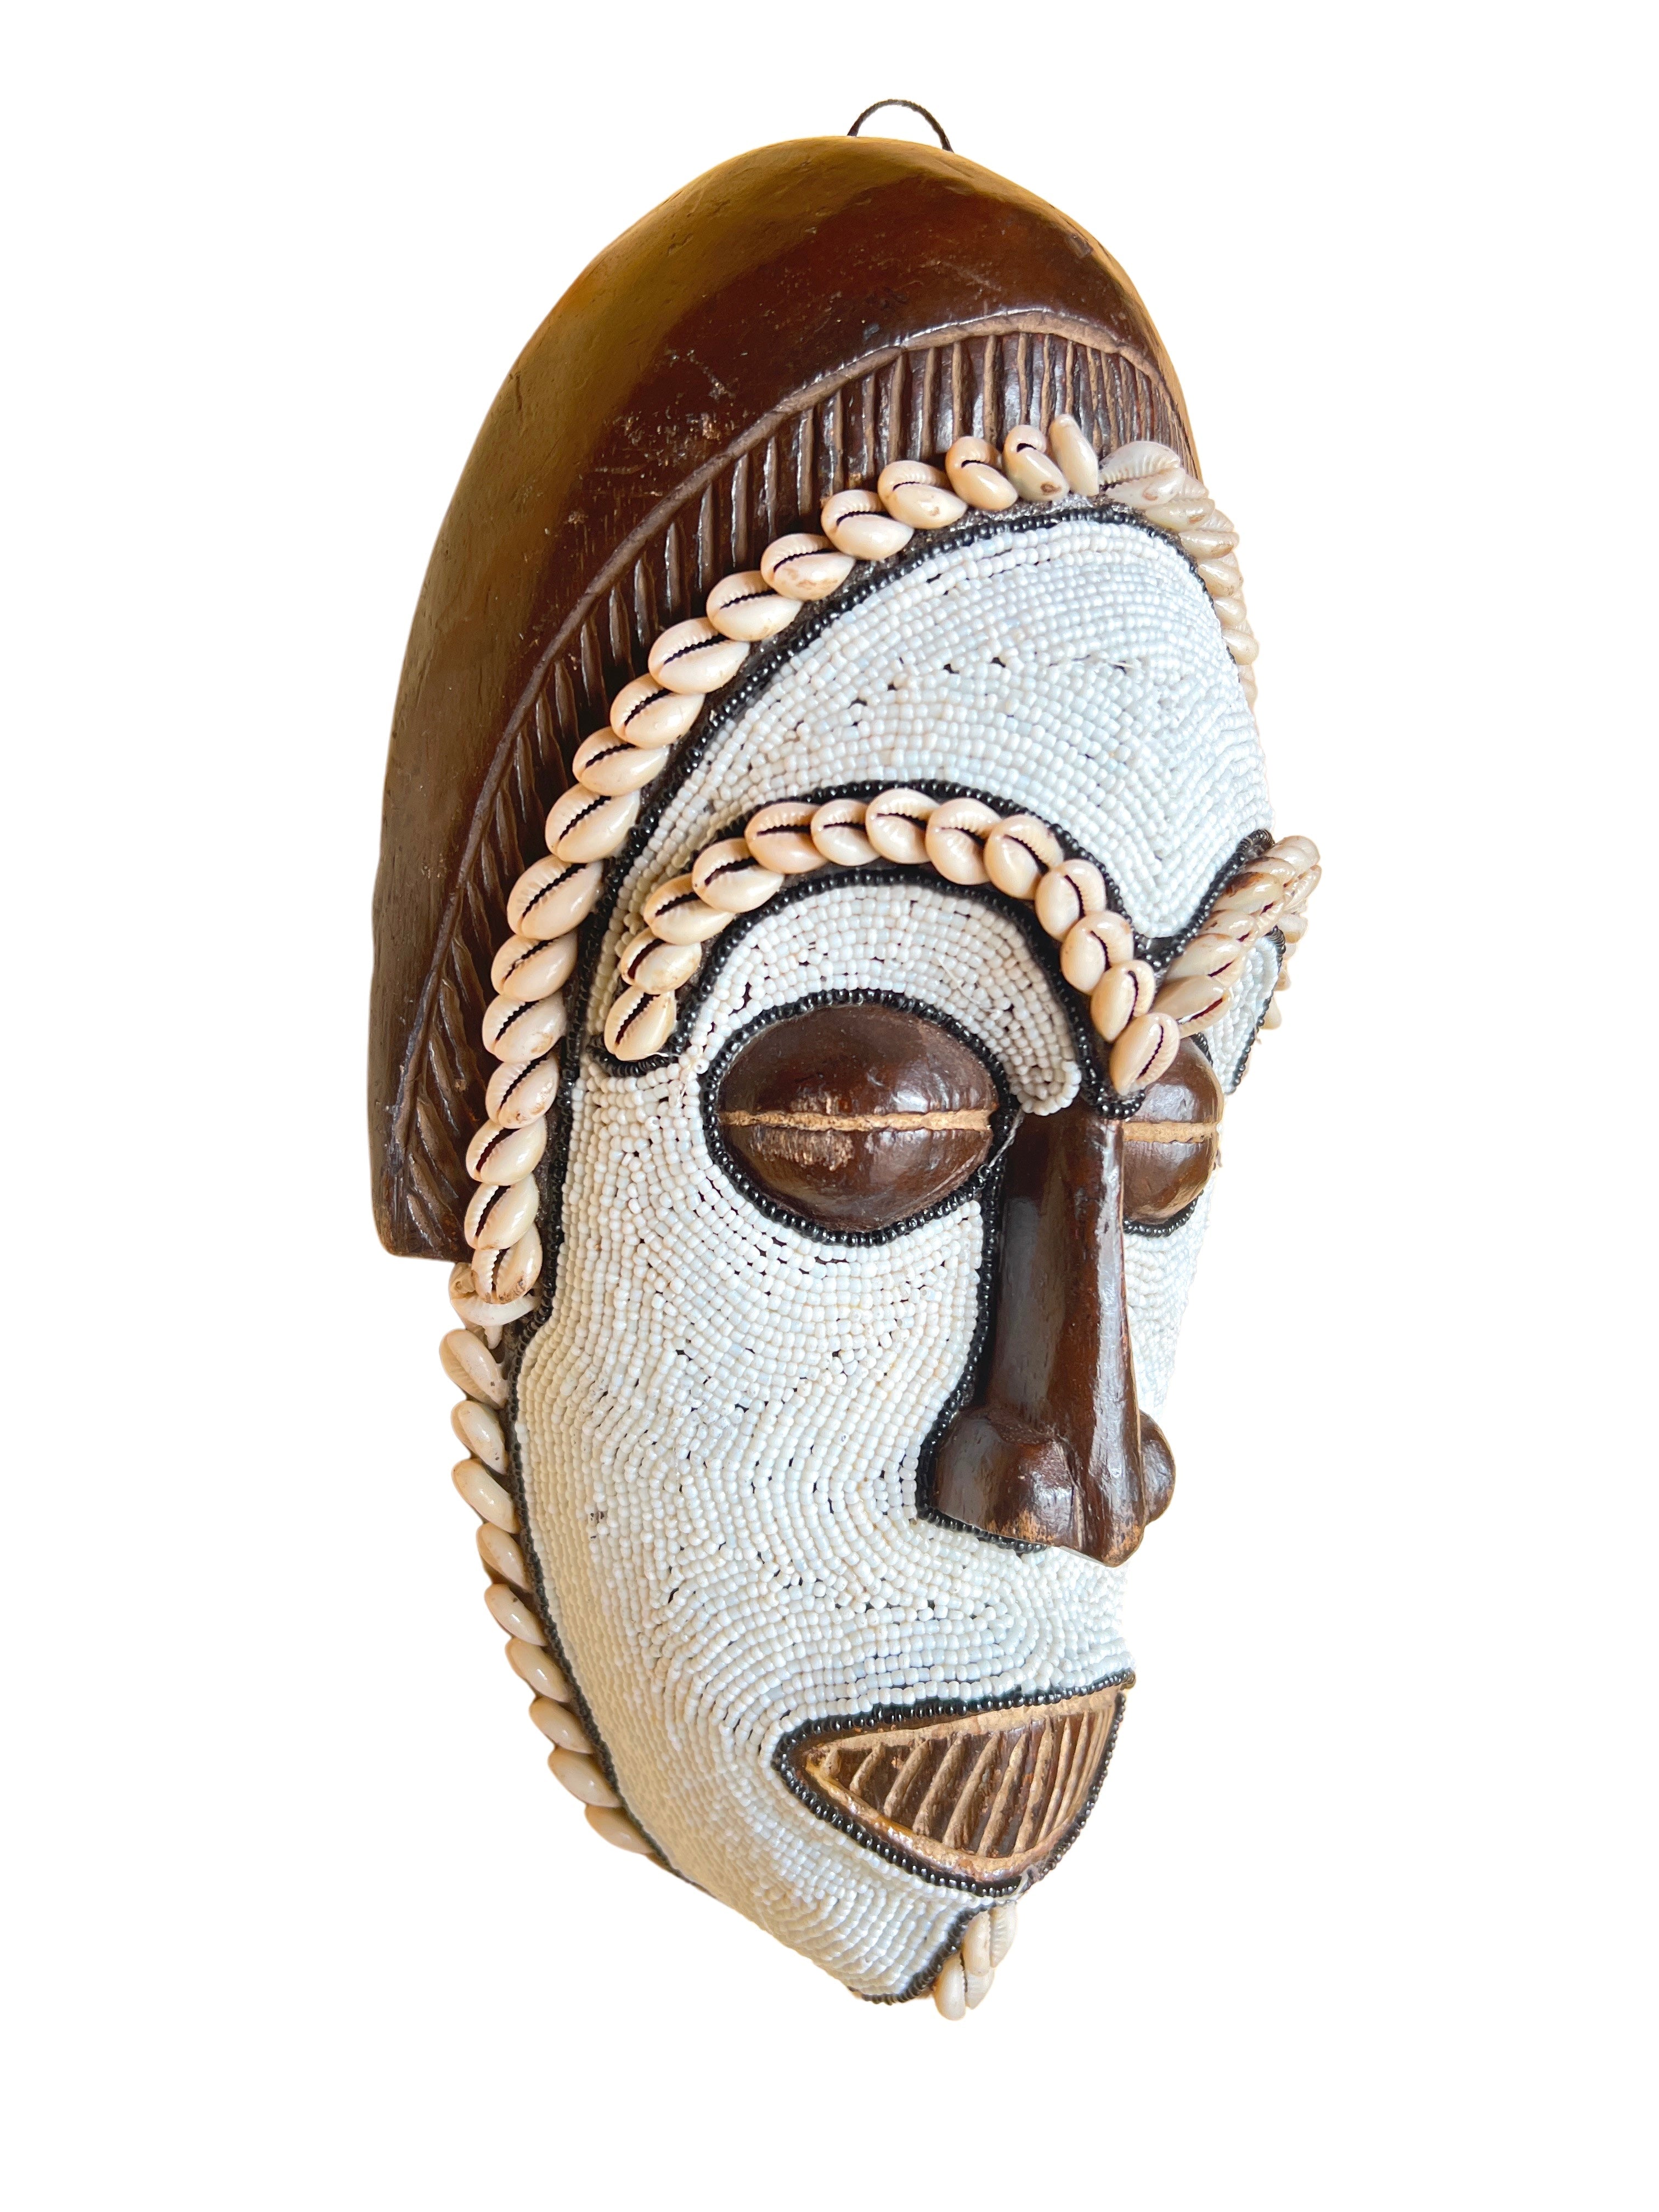 Igbo/Ibo Tribe Beaded Mask - Igbo/Ibo